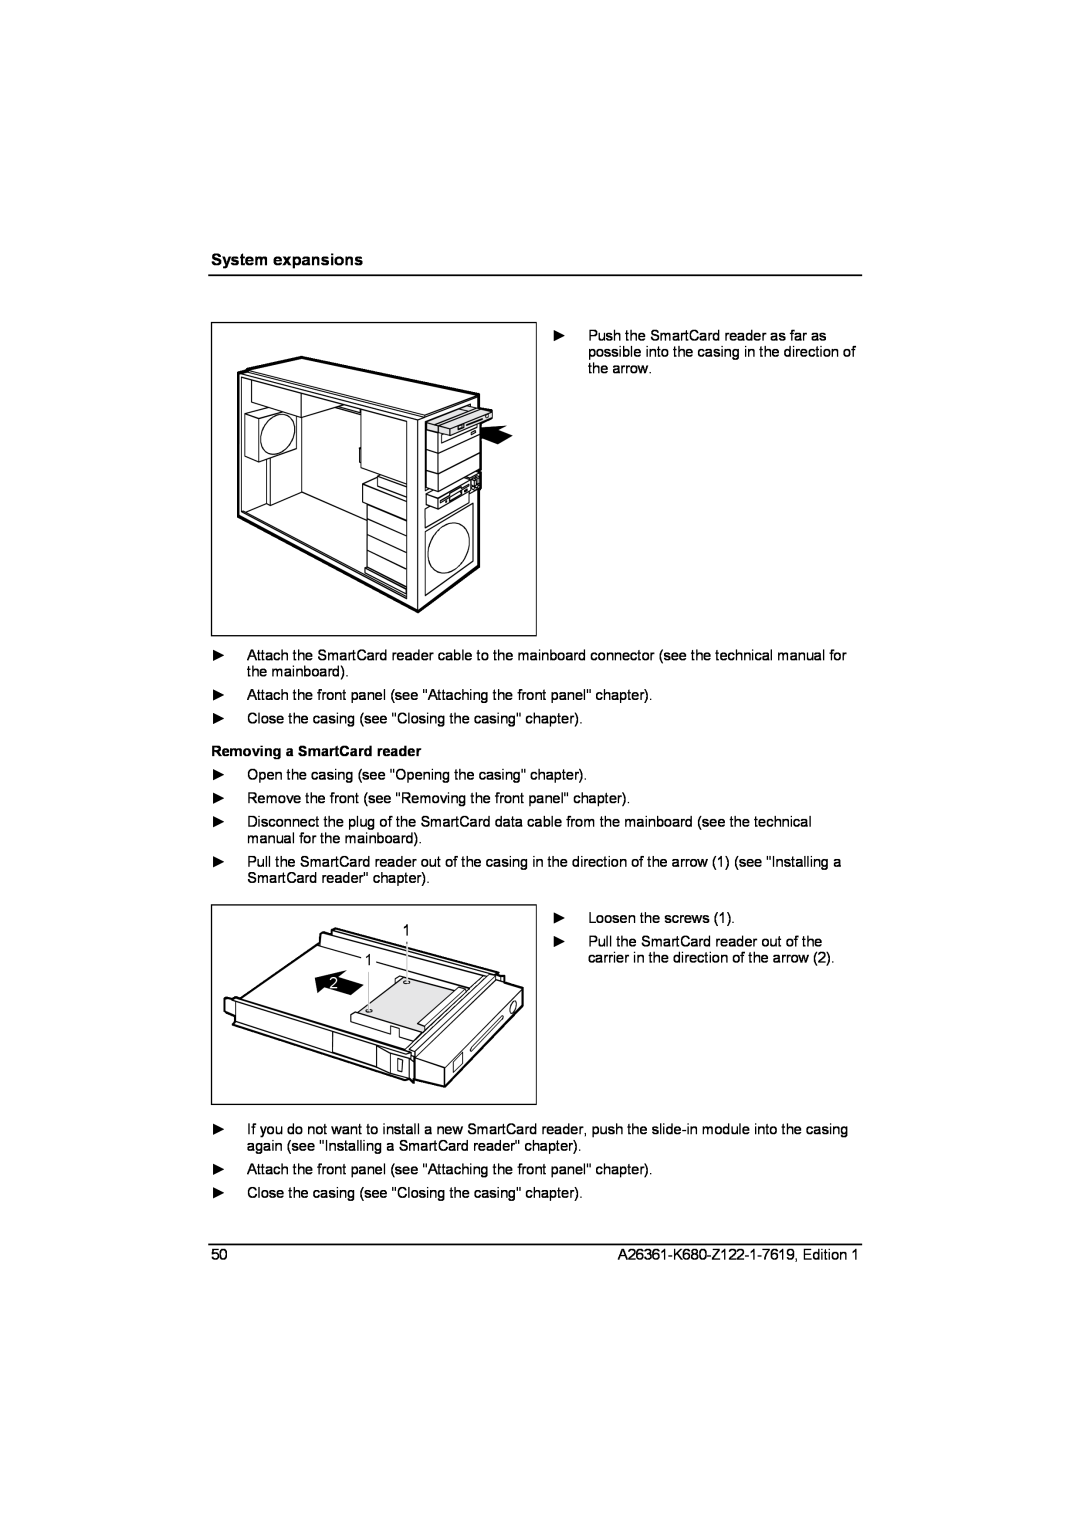 Fujitsu V810, R630 manual Removing a SmartCard reader, System expansions 